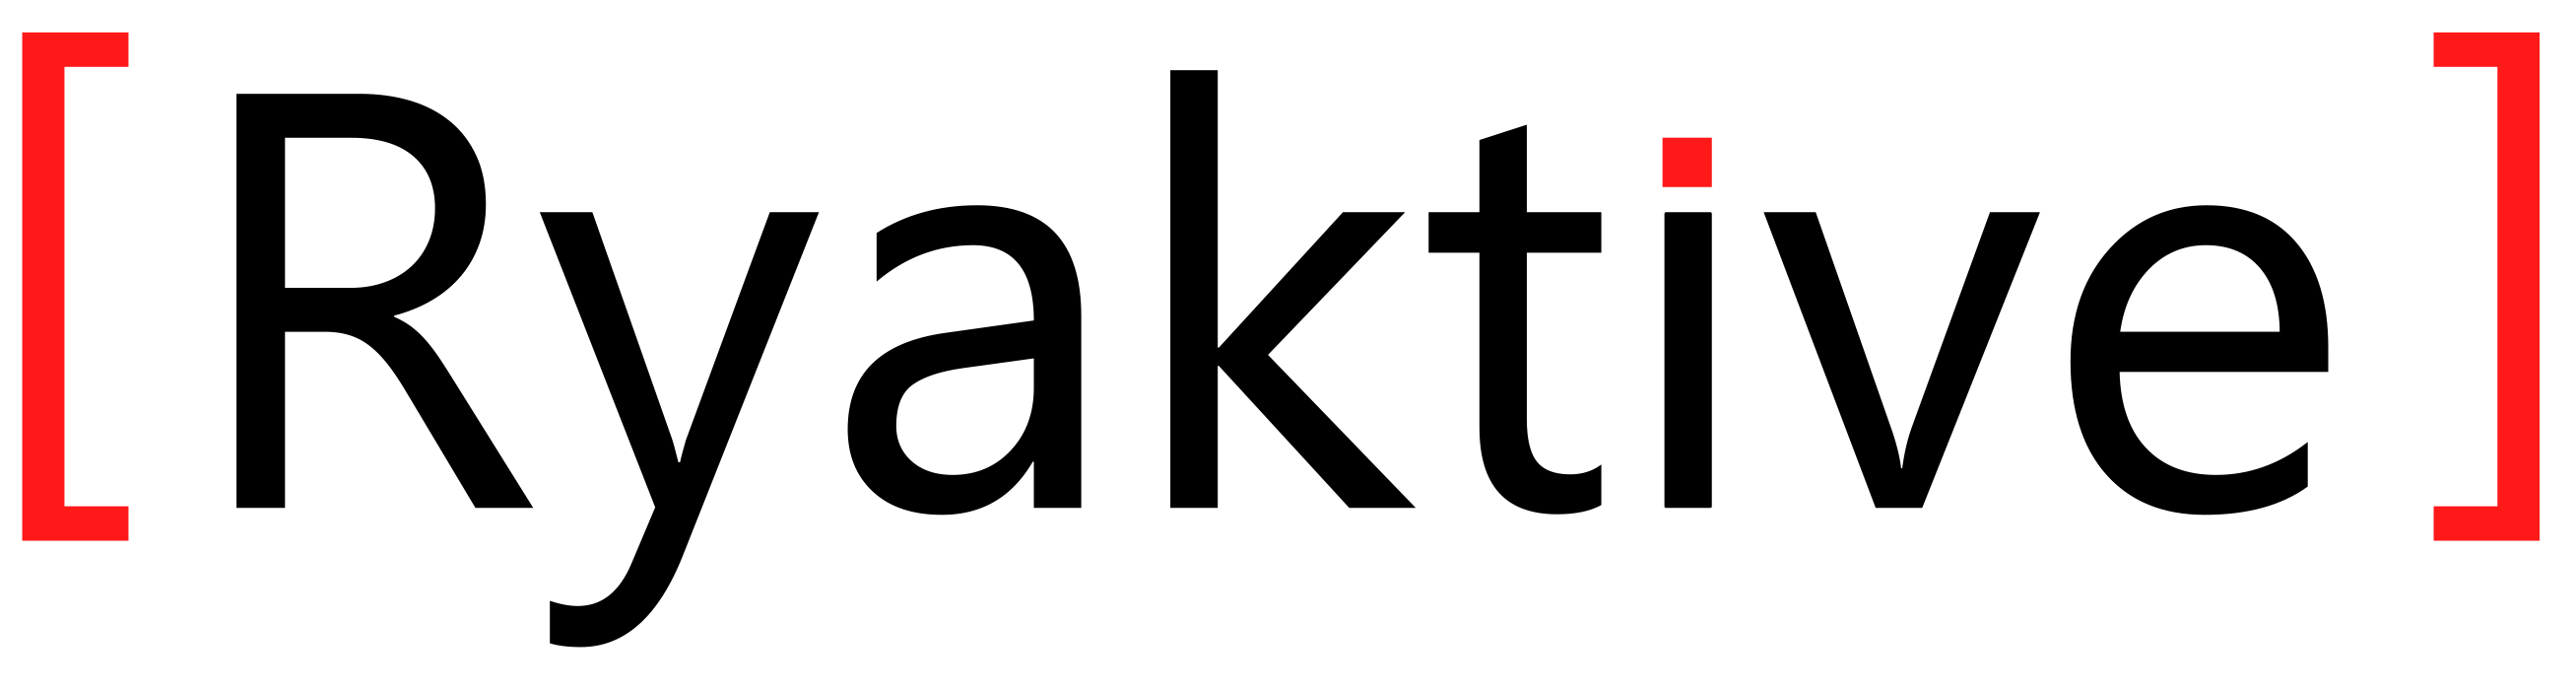 Ryaktive logo